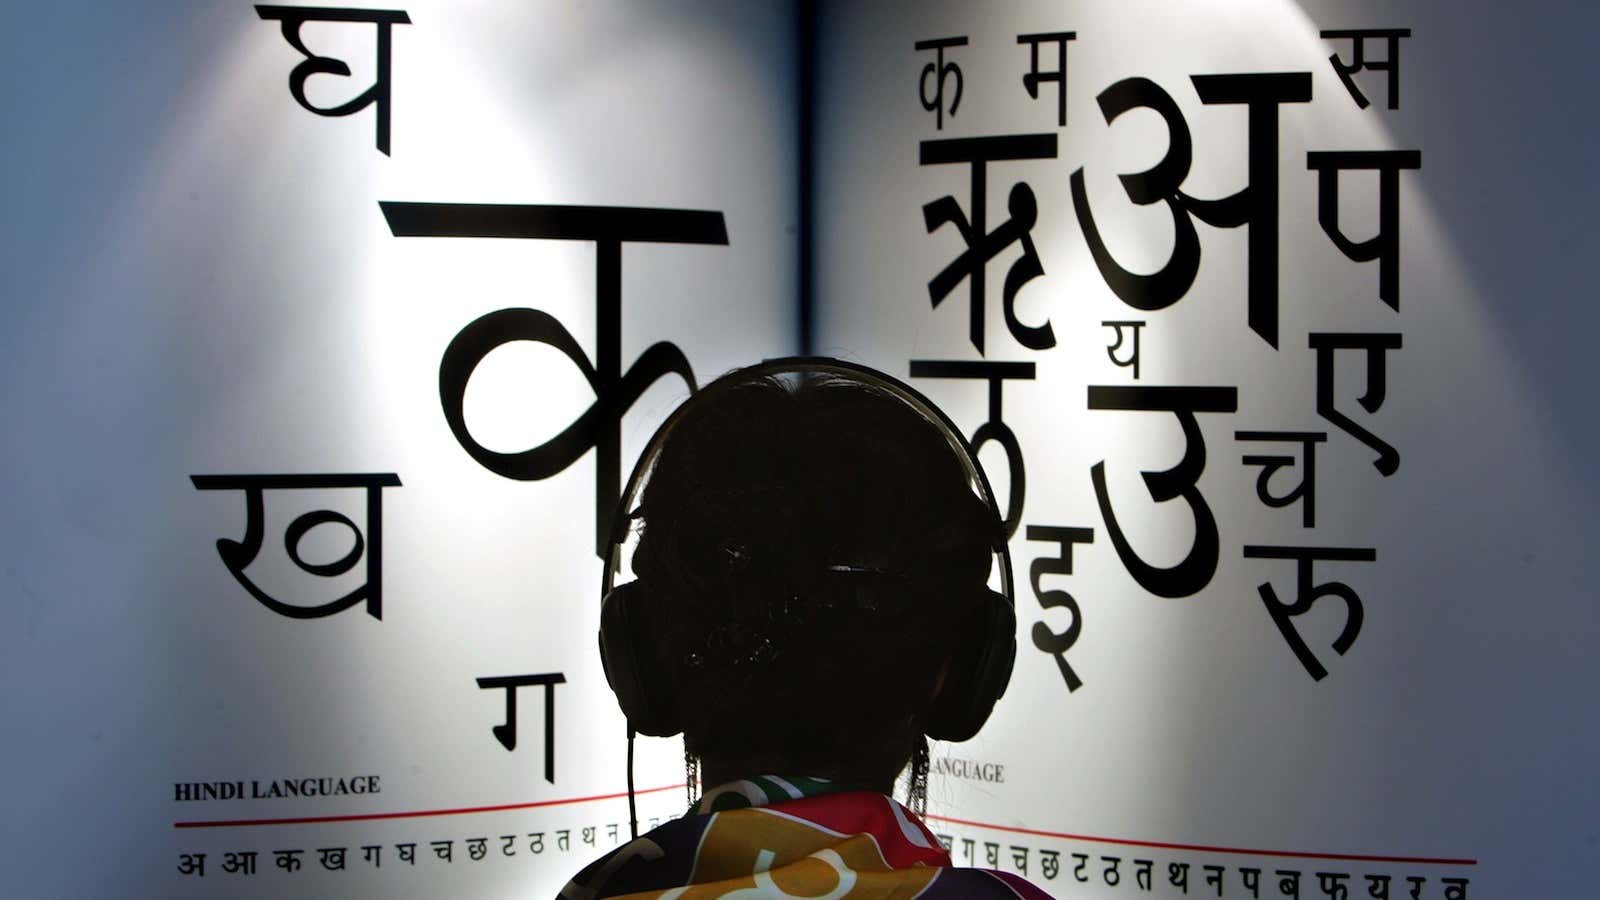 2015 has some interesting Hindi titles coming up.